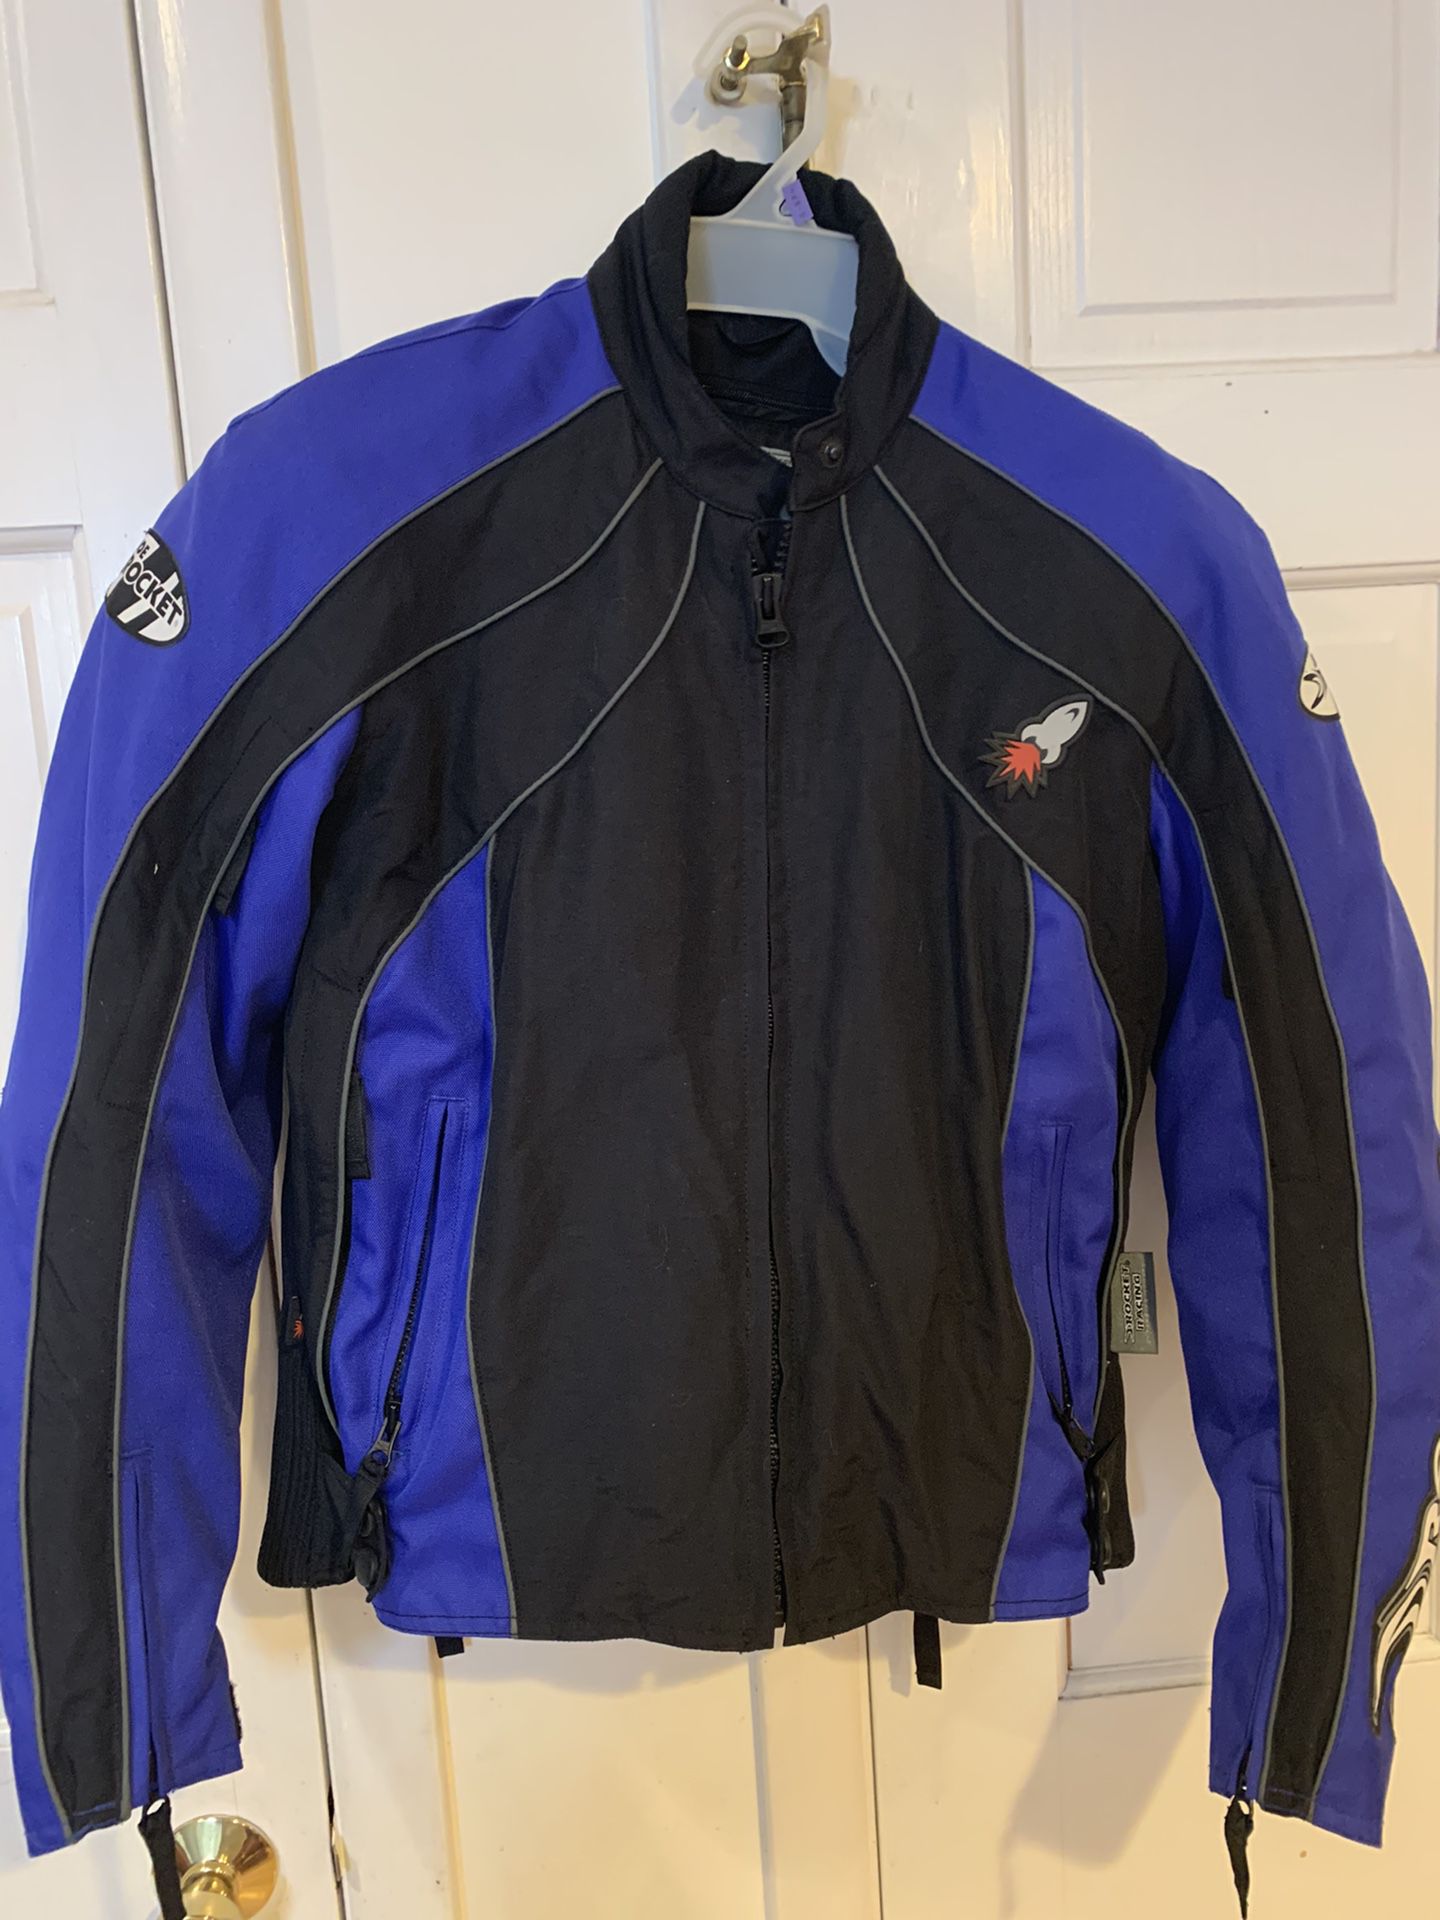 Joe Rocket wonen motorcycle jacket, size Large